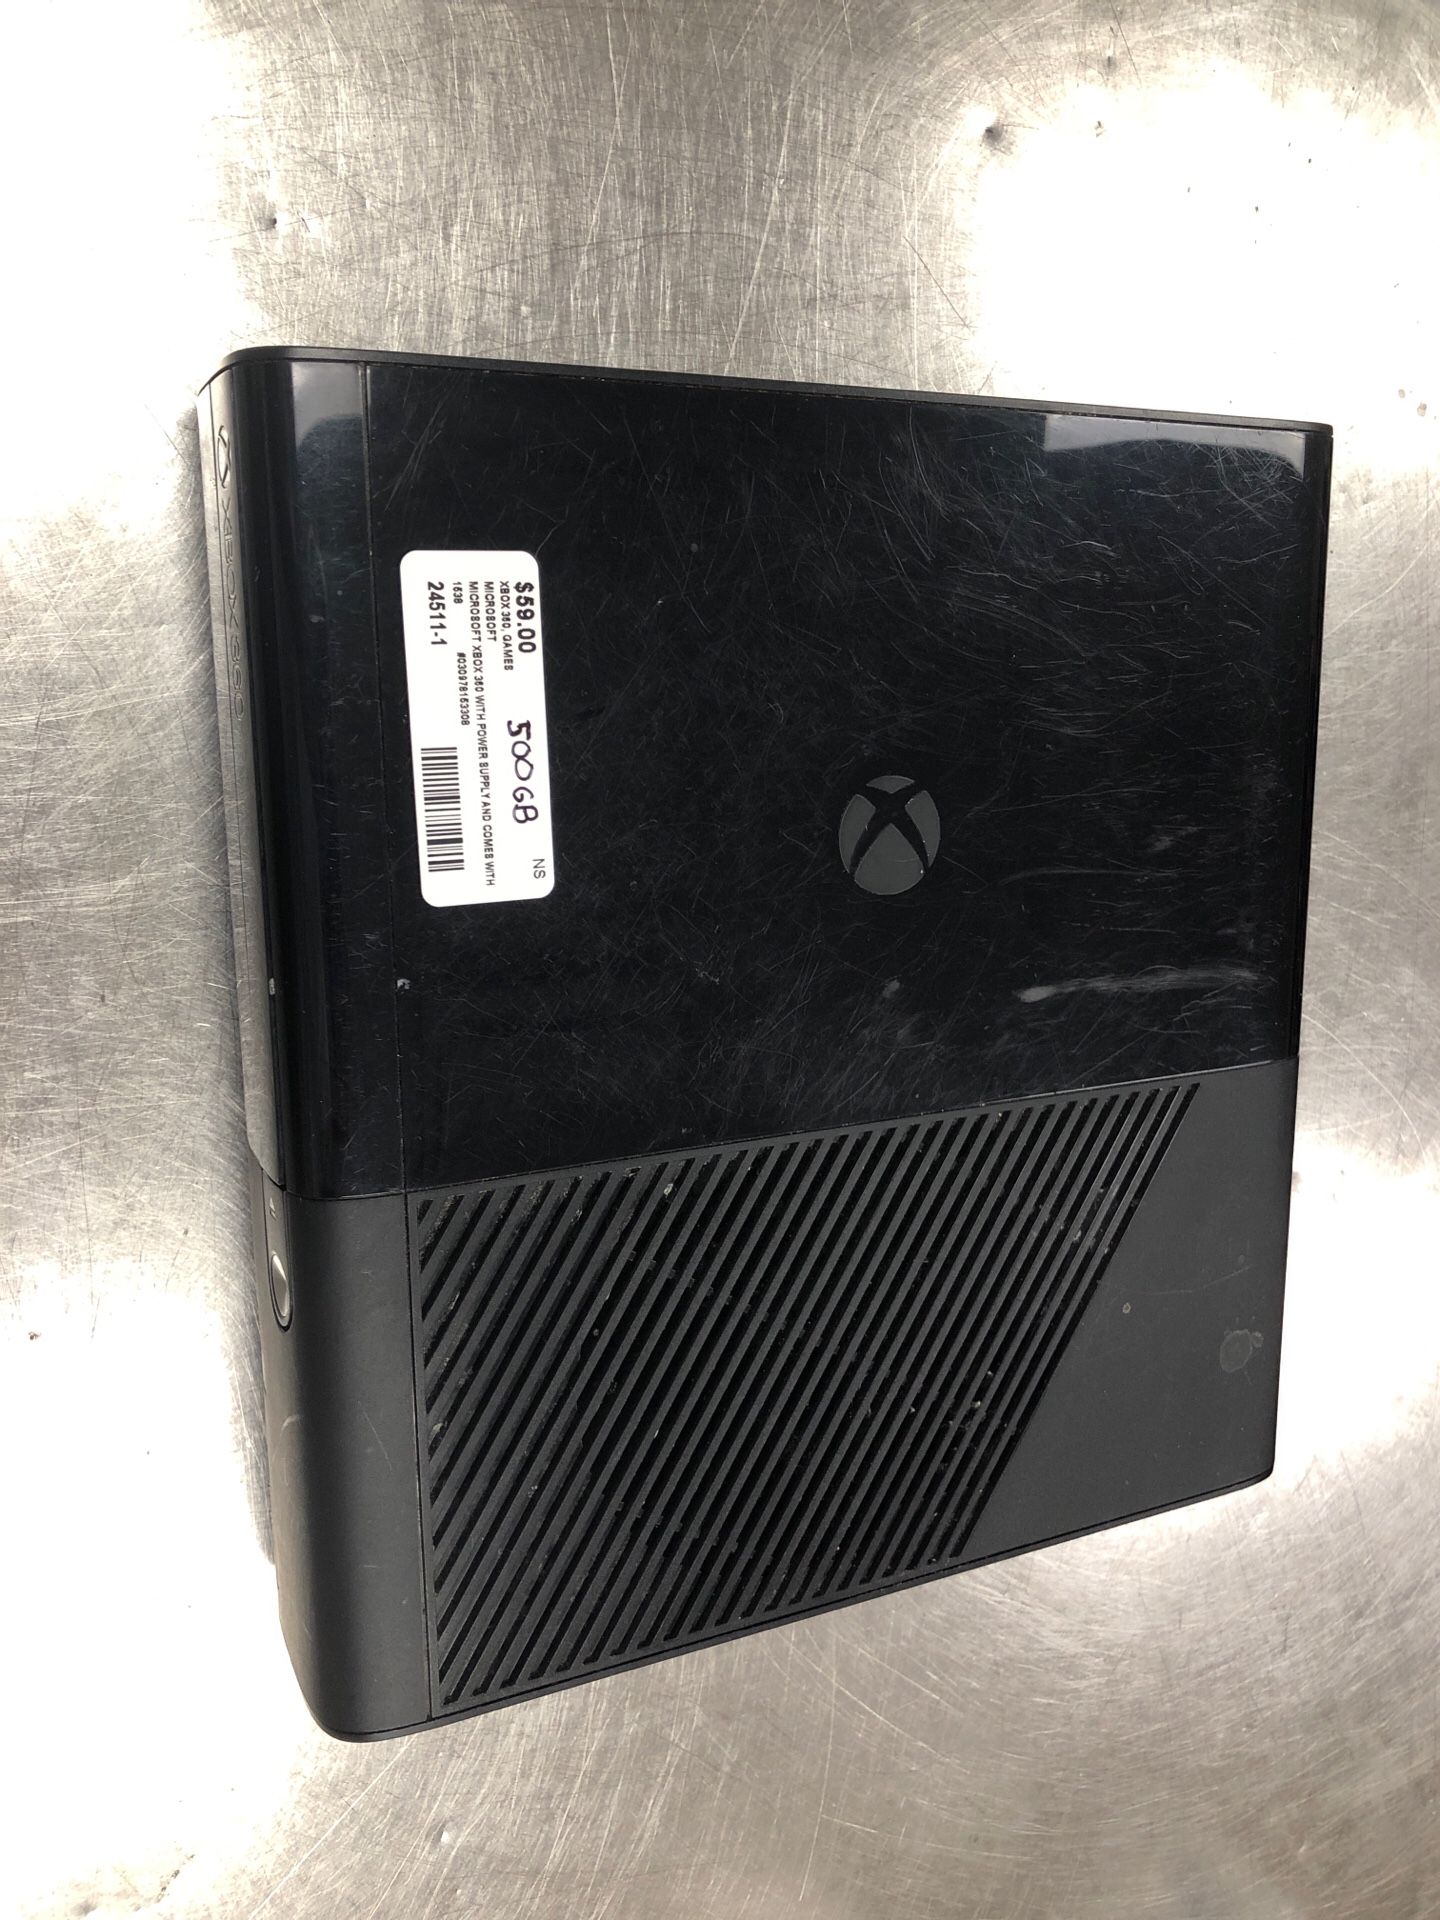 Microsoft Xbox 360 (24511-1)